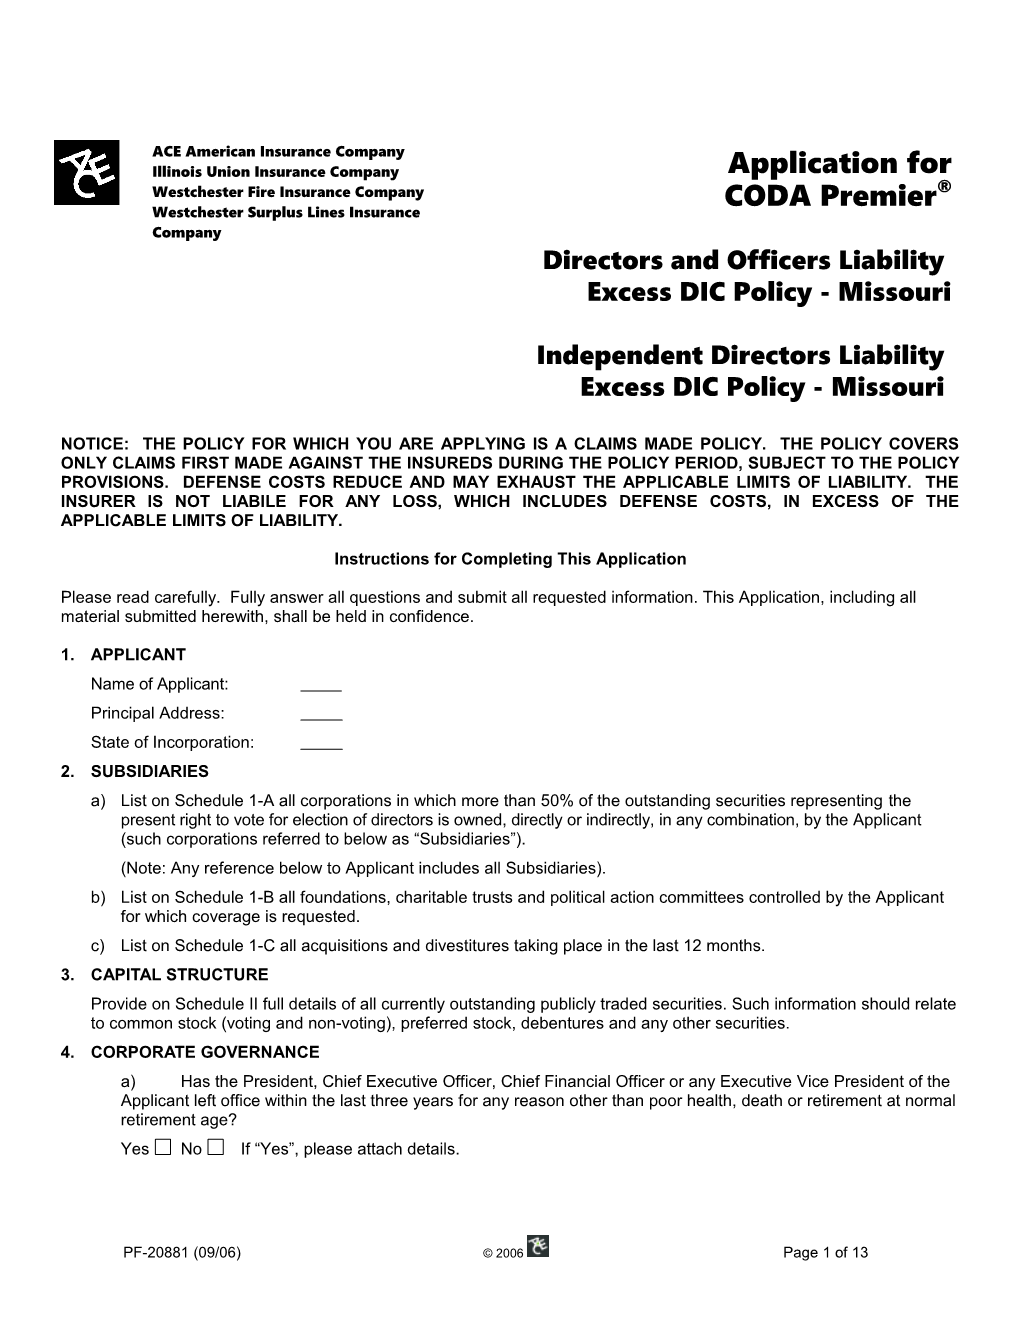 CODA Premier IDL Excess DIC - Application (MO)